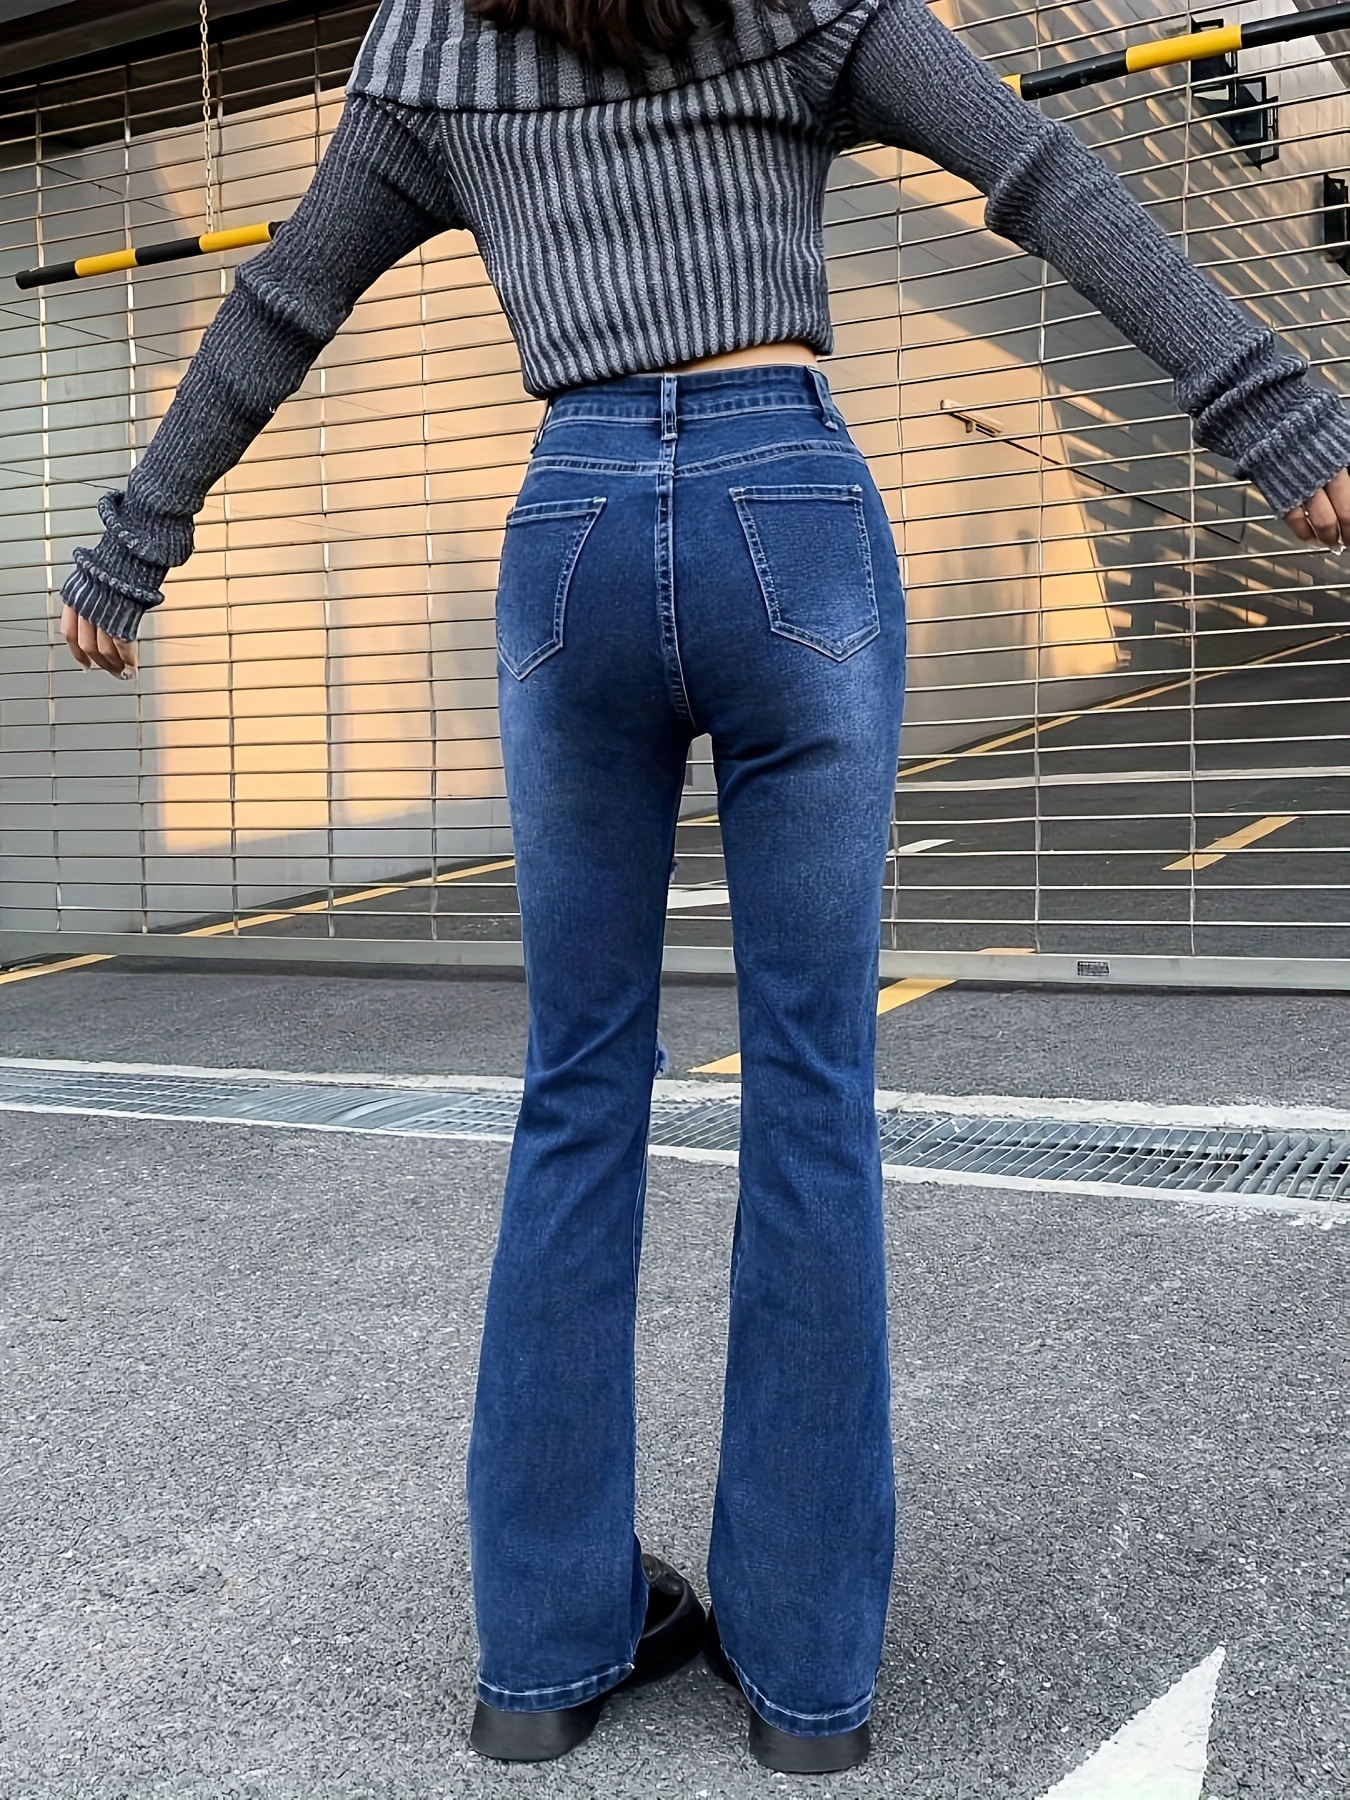 Jeans altos cintura